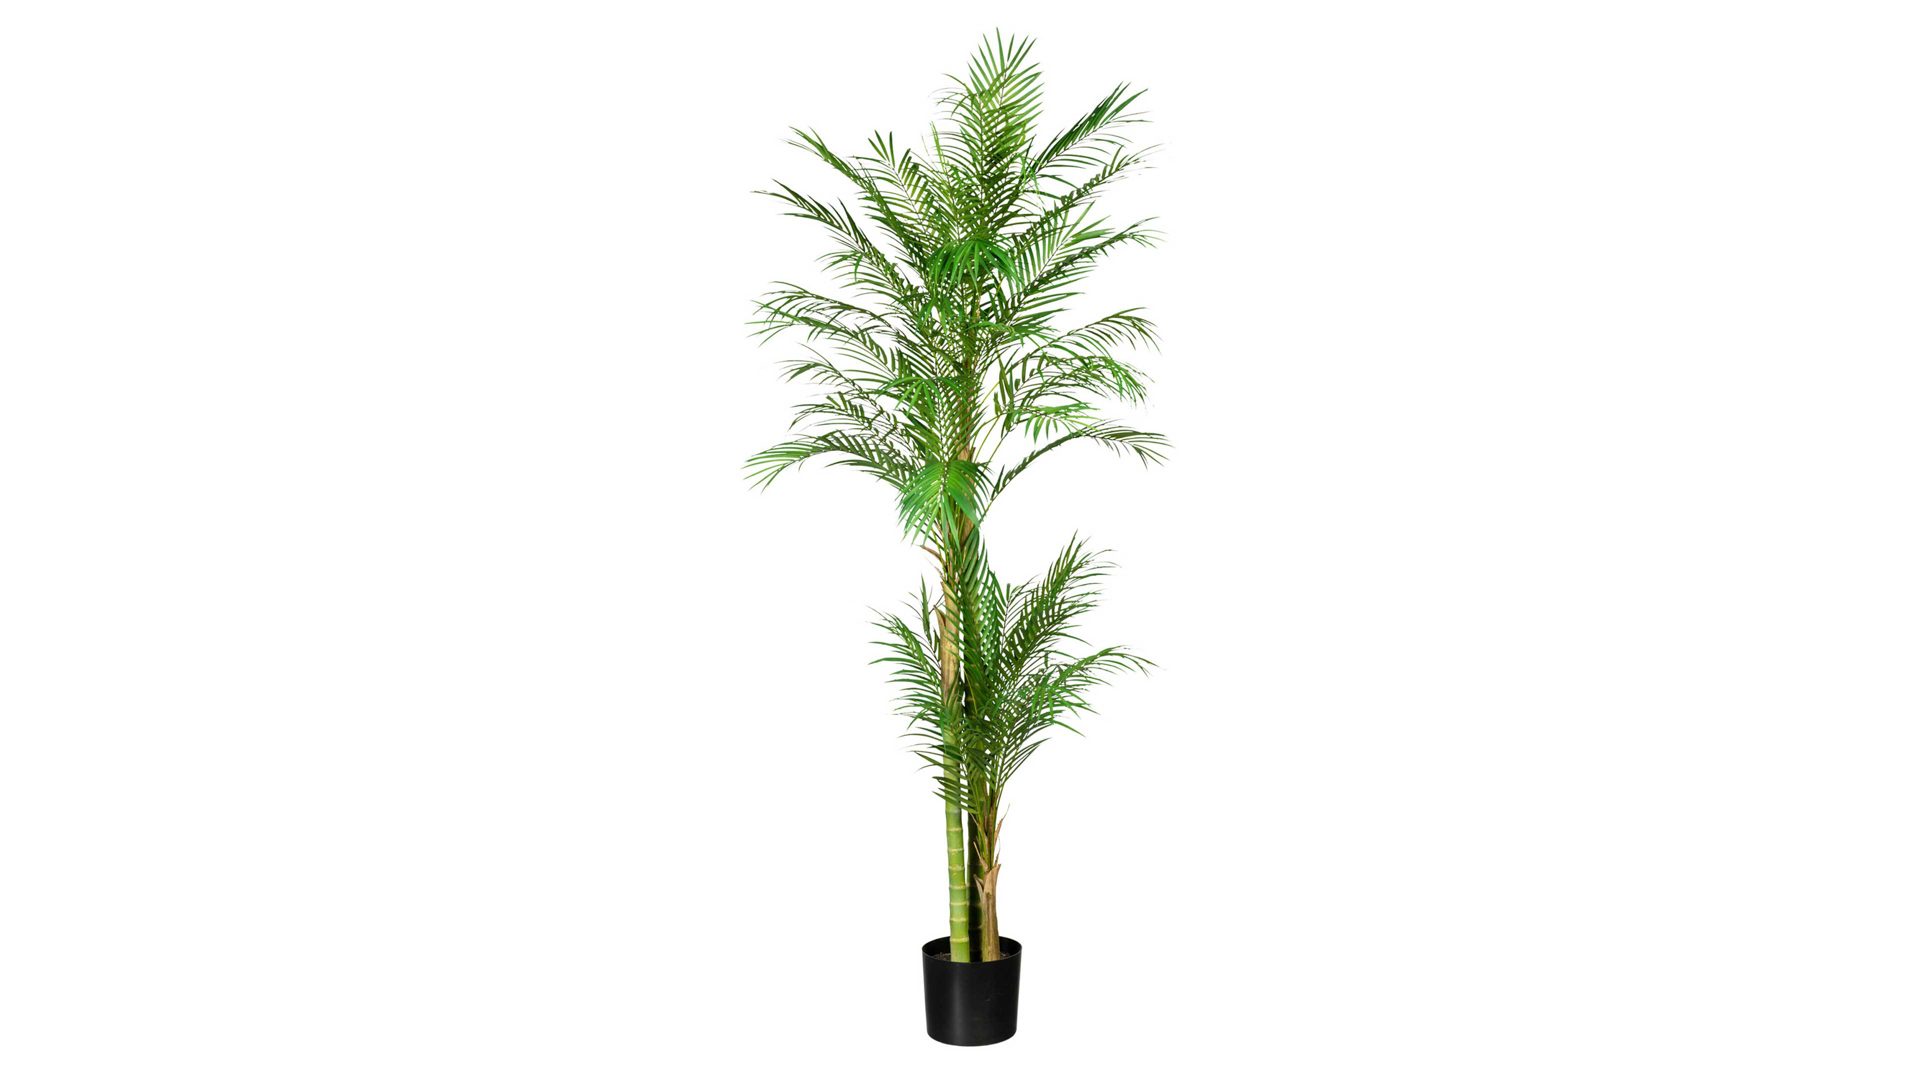 Pflanze Gasper aus Kunststoff in Grün Arecapalme grüner Kunststoff & schwarzer Topf – Höhe ca. 180 cm